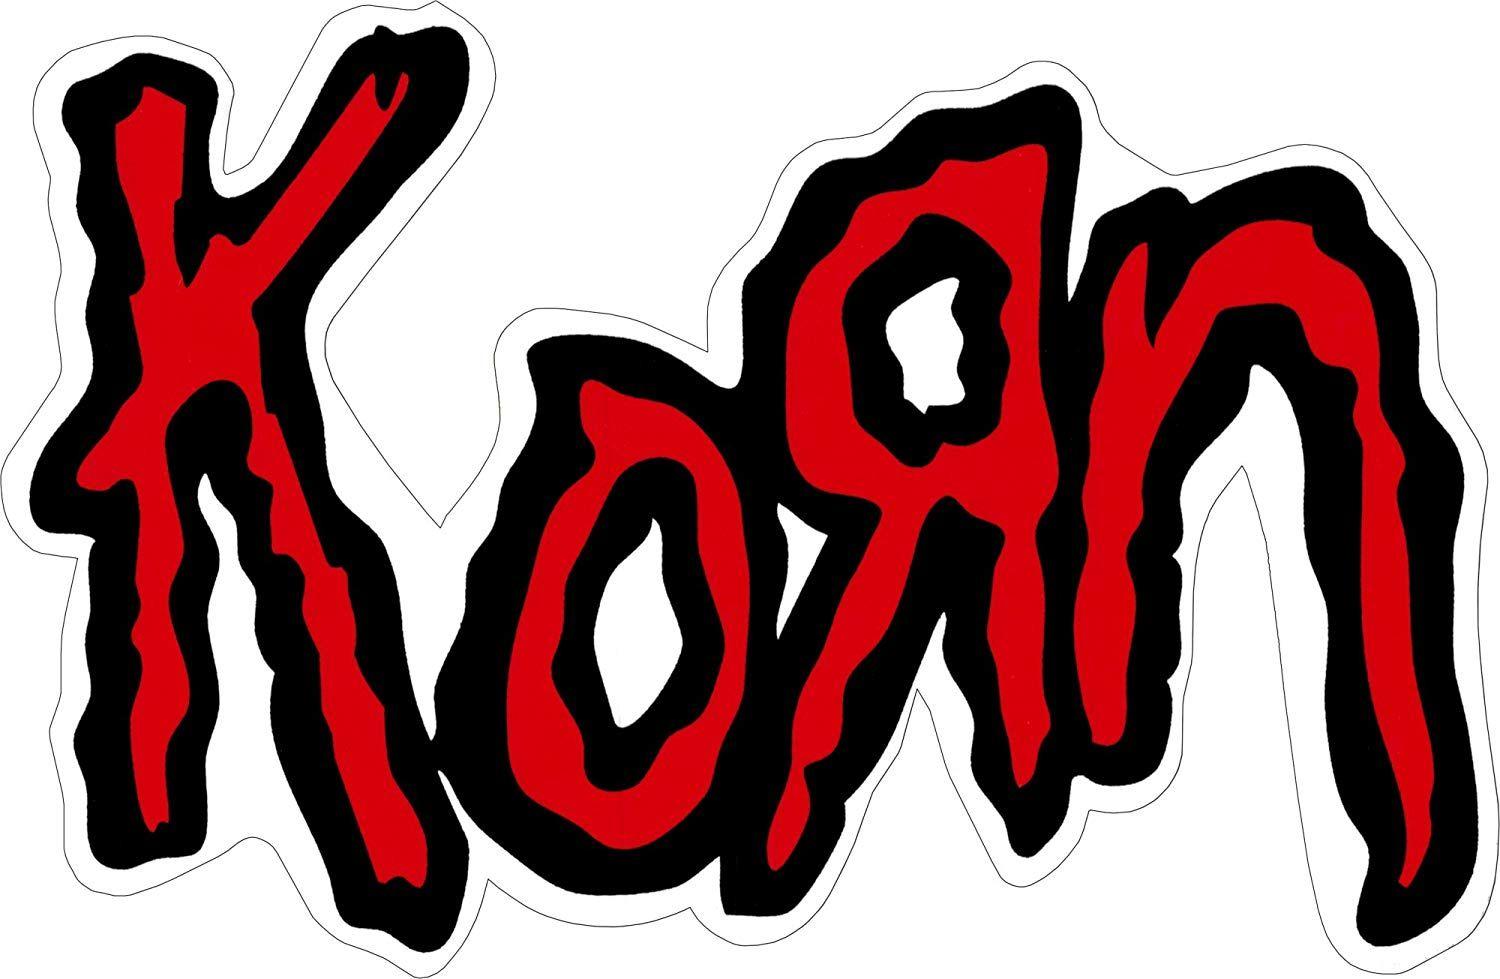 Red Black White Logo - Amazon.com: Korn - Red, Black & White Classic Logo - Sticker/Decal ...